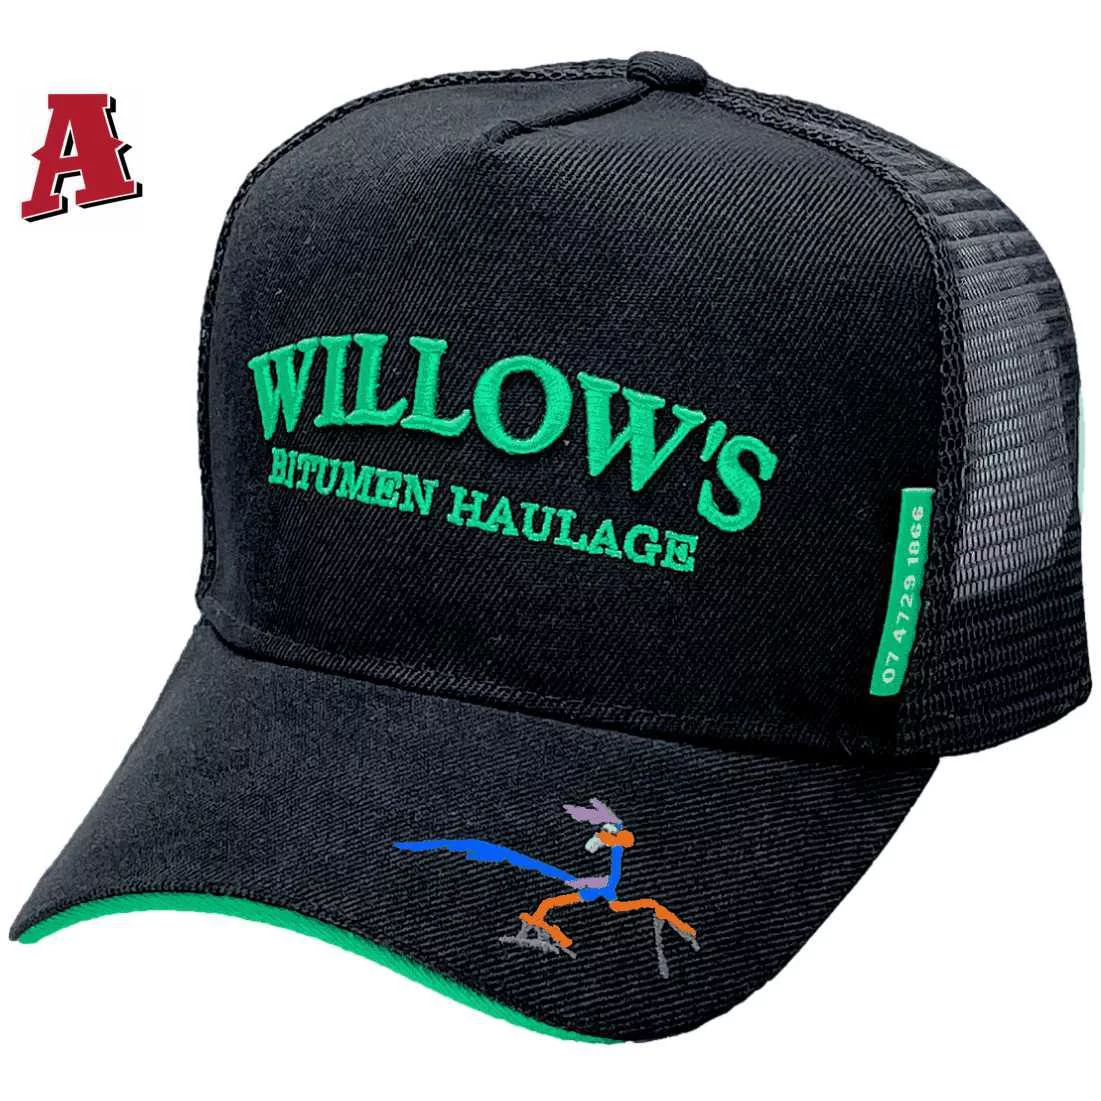 Willow's Bitumen Haulage Stuart QLD HP Midrange Aussie Trucker Hats with Australian Head Fit Crown and Double SideBands - Black Green